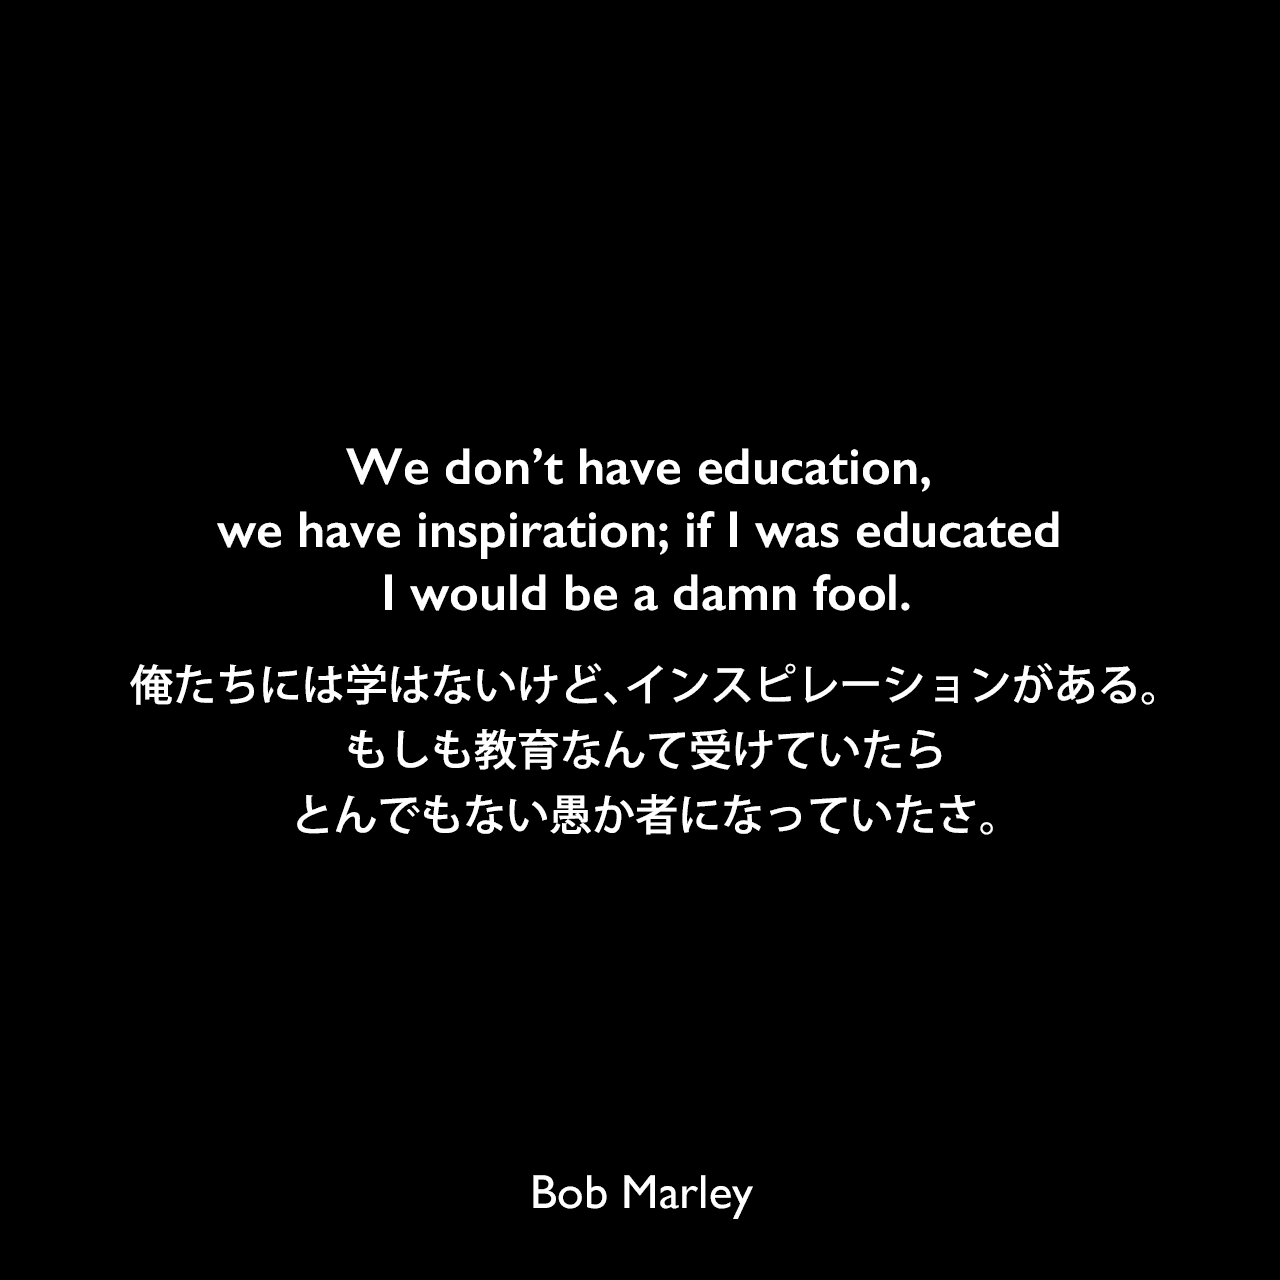 We don’t have education, we have inspiration; if I was educated I would be a damn fool.俺たちには学はないけど、インスピレーションがある。もしも教育なんて受けていたら、とんでもない愚か者になっていたさ。Bob Marley